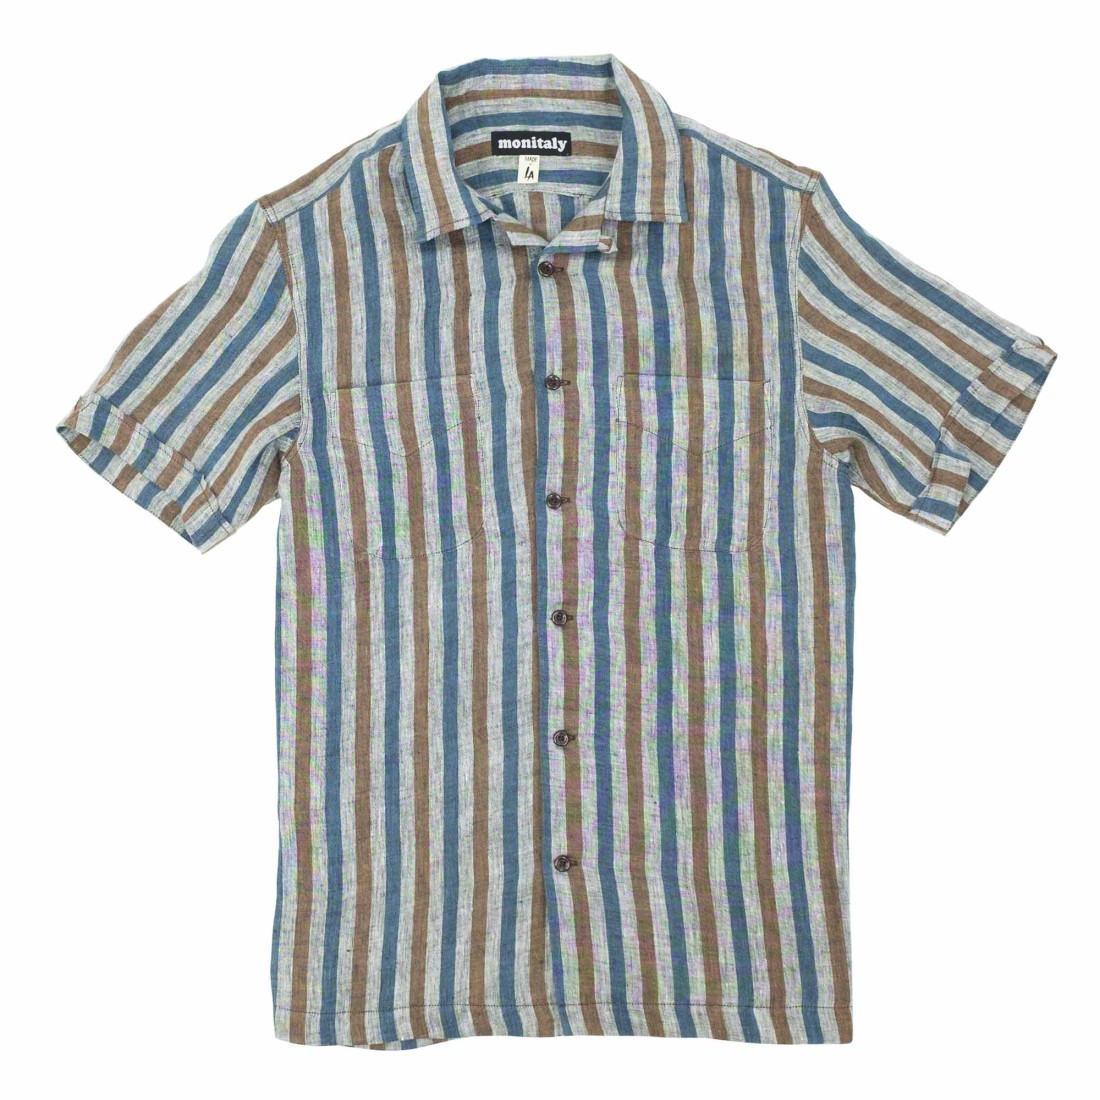 Vacation-Shirt-Linen-Stripe-1-1.jpg